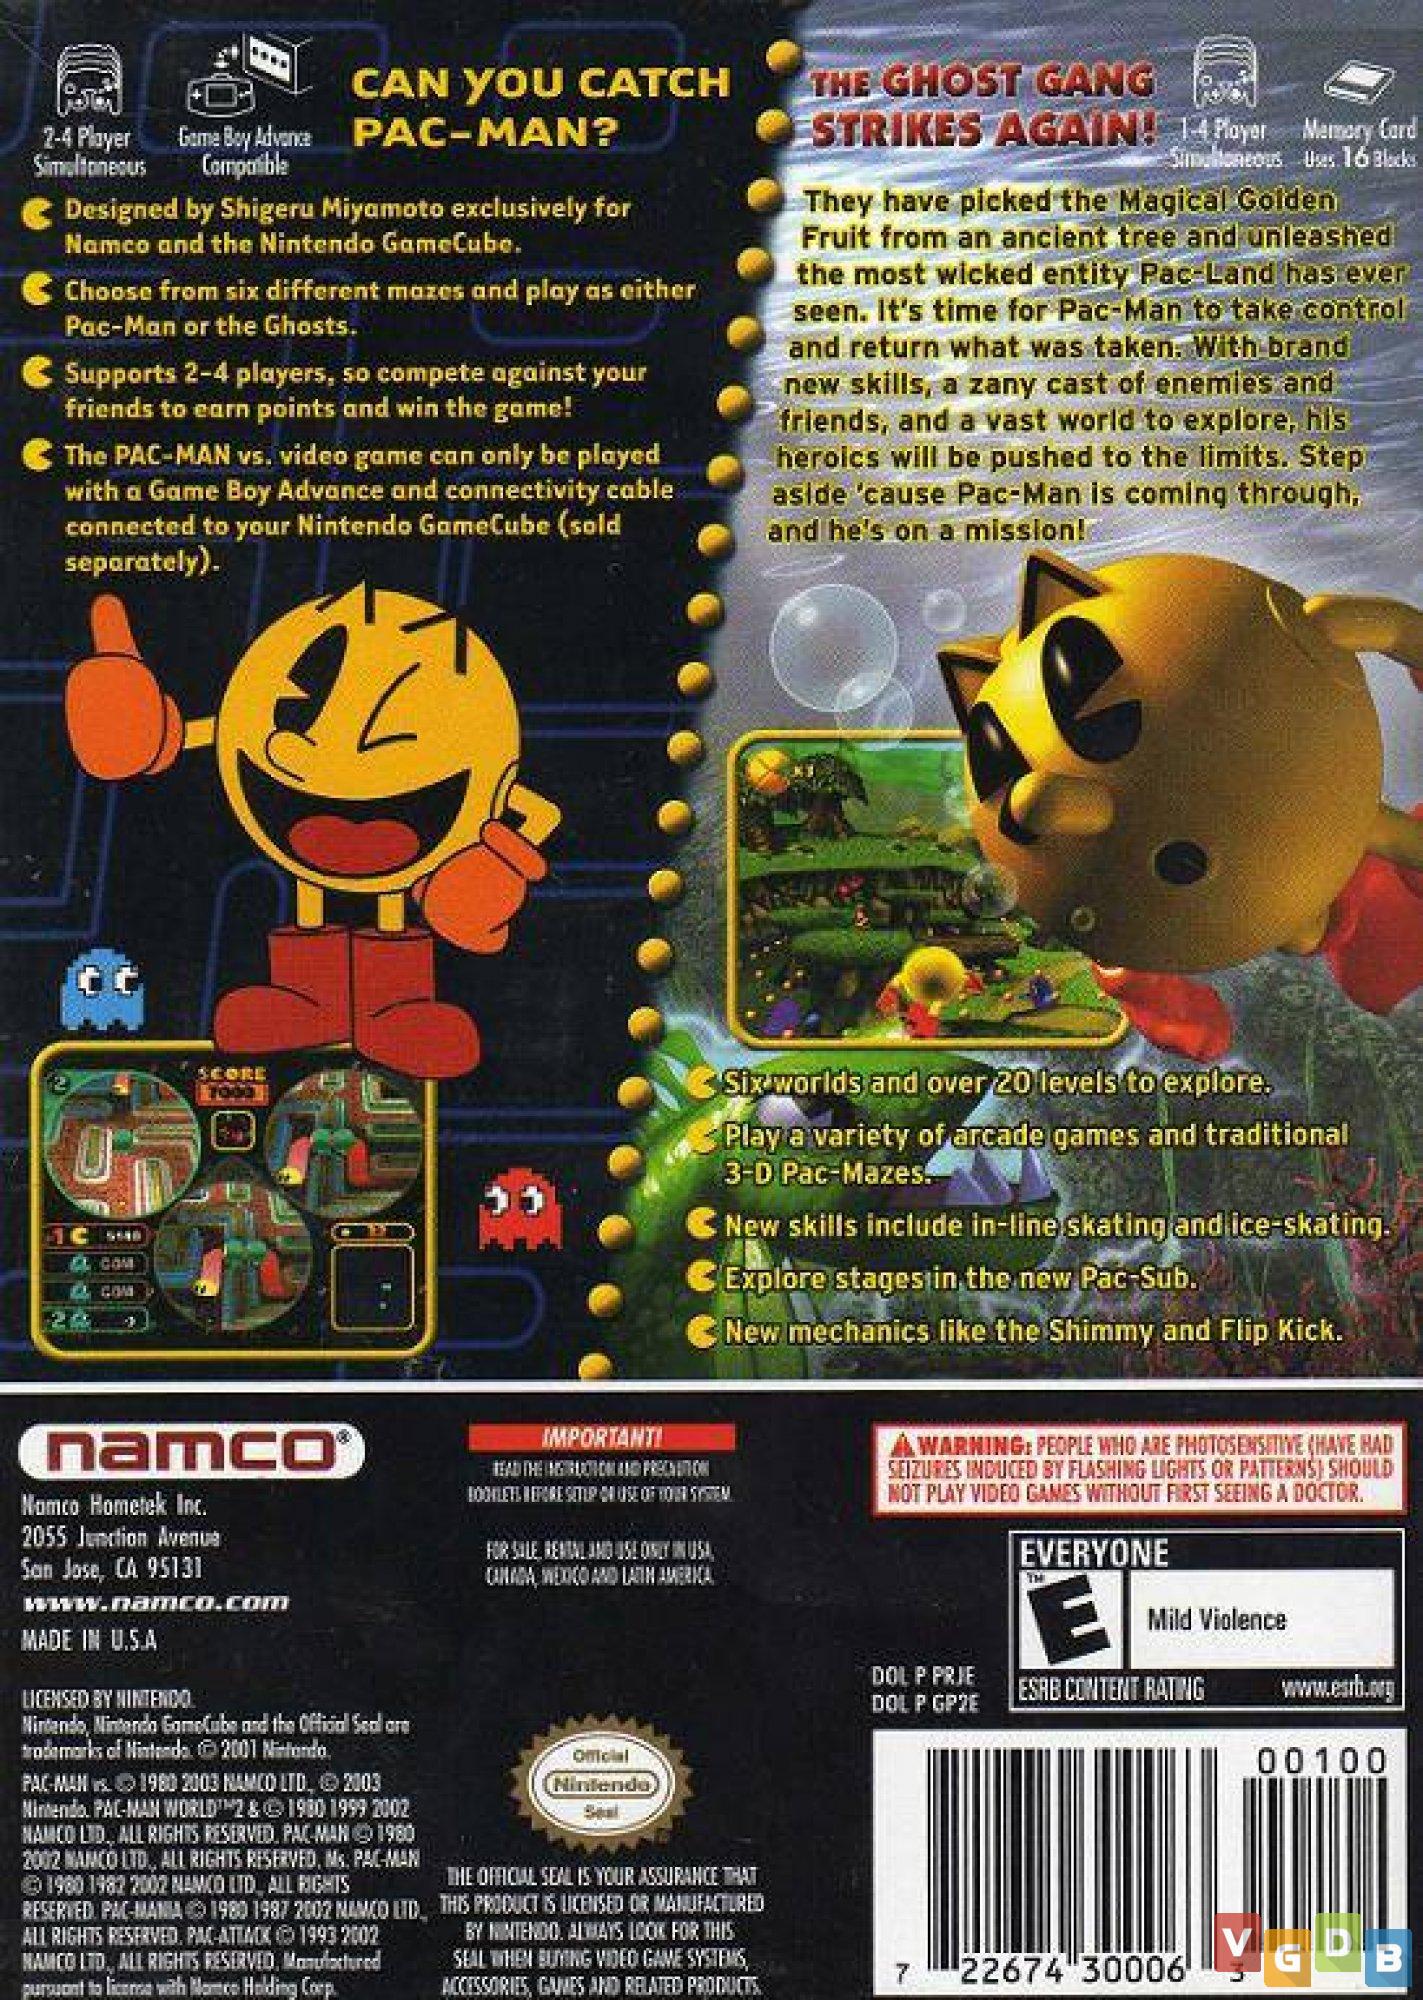 Pac-man VS. / Pac-man World 2 Original - GC - Sebo dos Games - 10 anos!